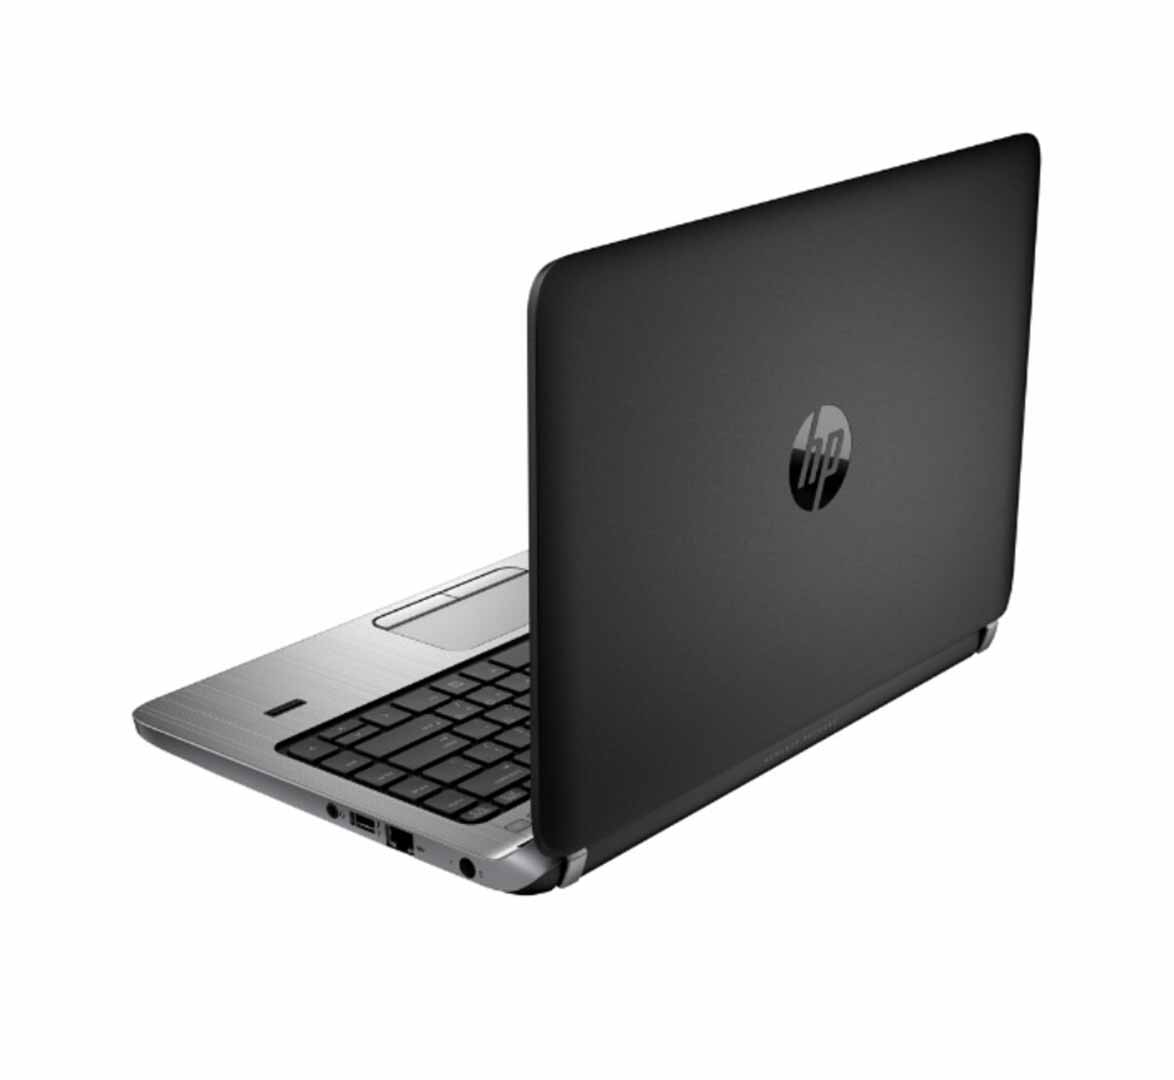 HP ProBook 430 G3 Business Laptop, Intel Core i7-6th Gen CPU, 8GB RAM, 256GB SSD, 13 inch Display, Windows 10 Pro, Refurbished Laptop